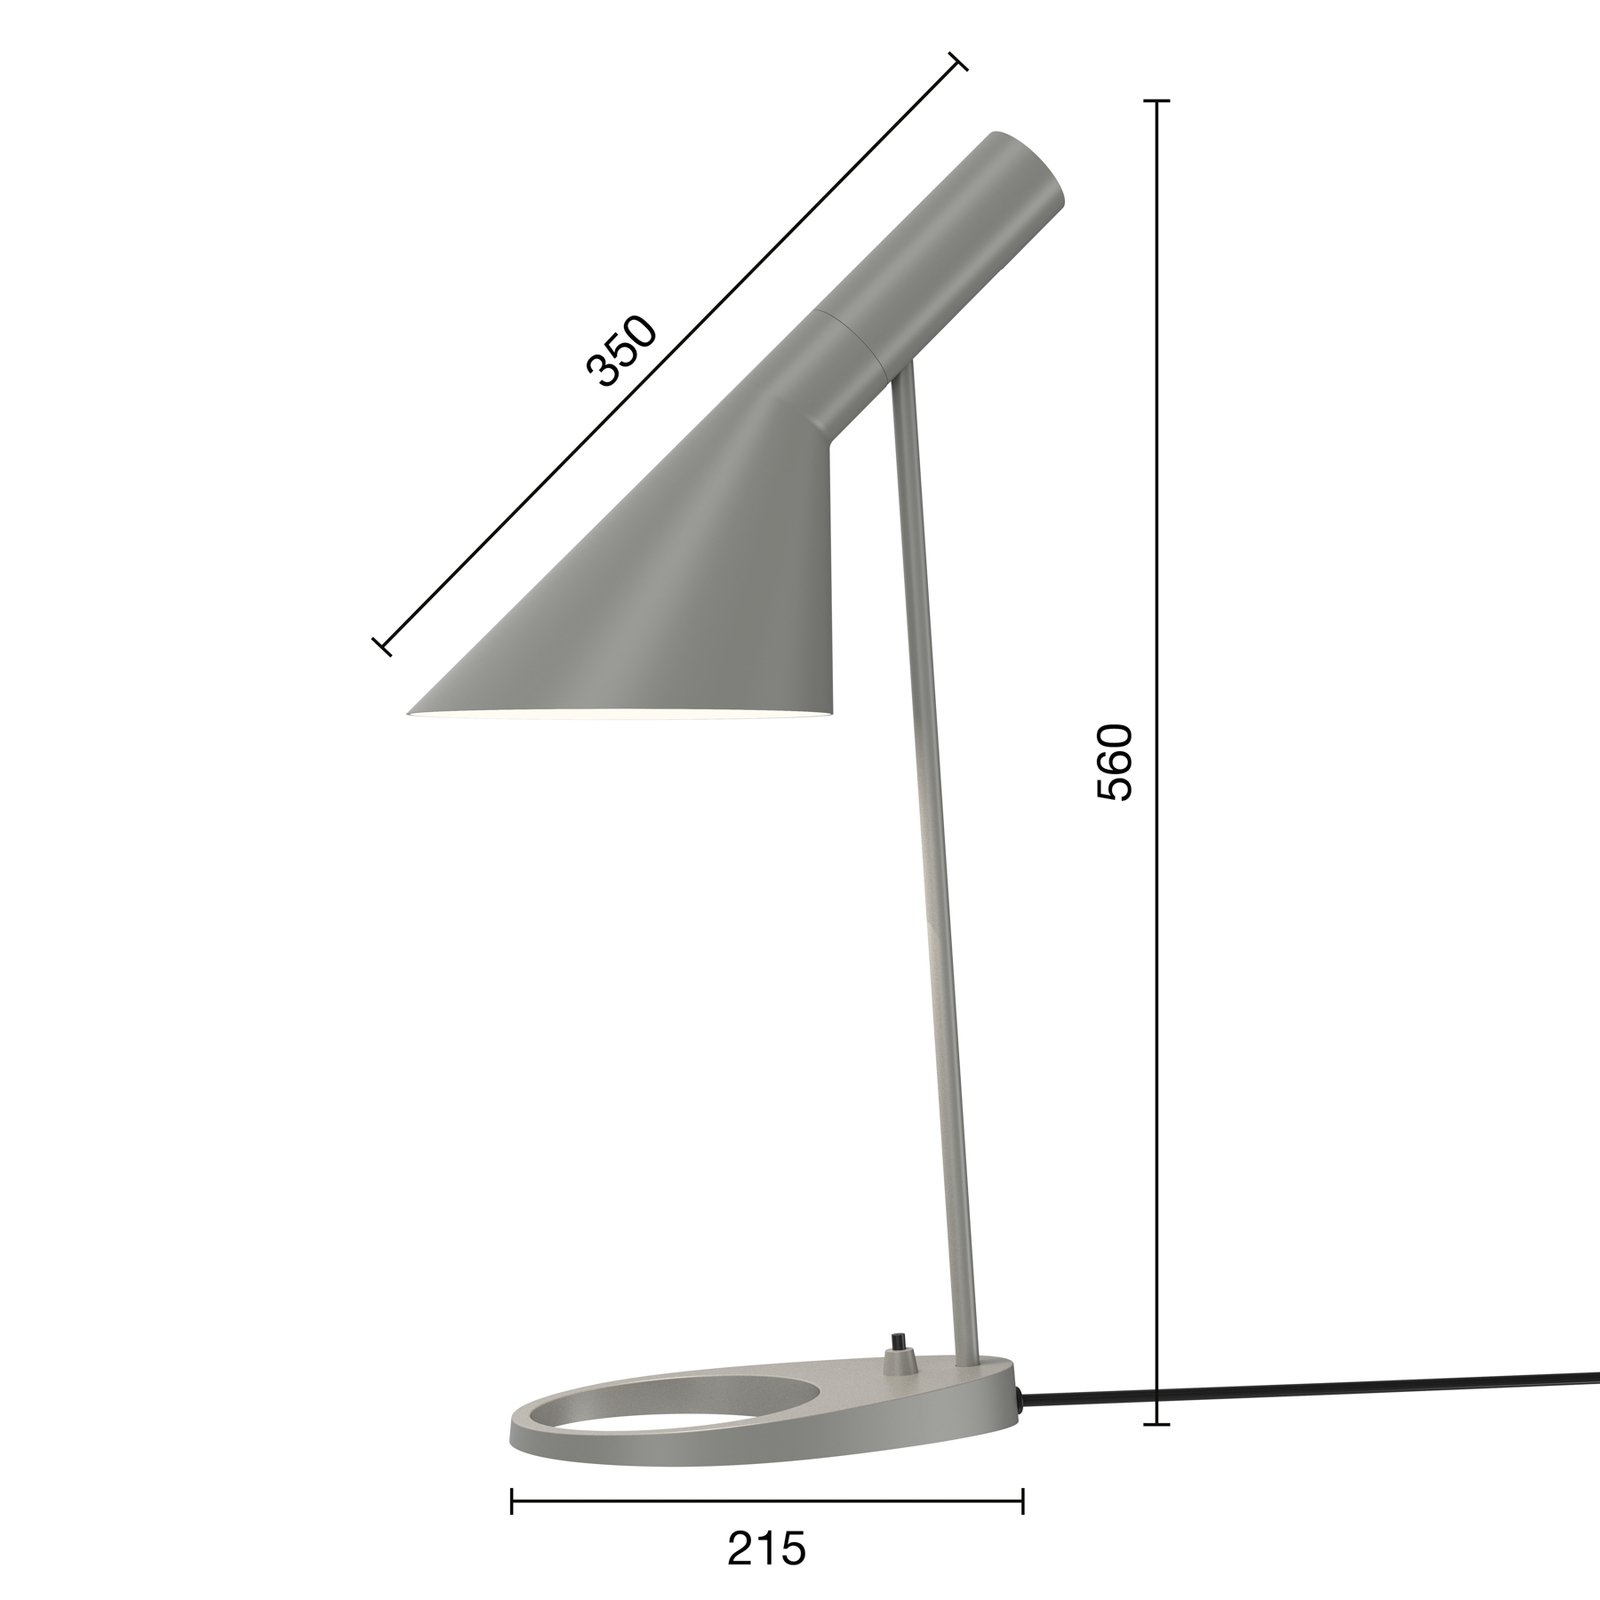 Louis Poulsen AJ Mini lampe à poser design gris